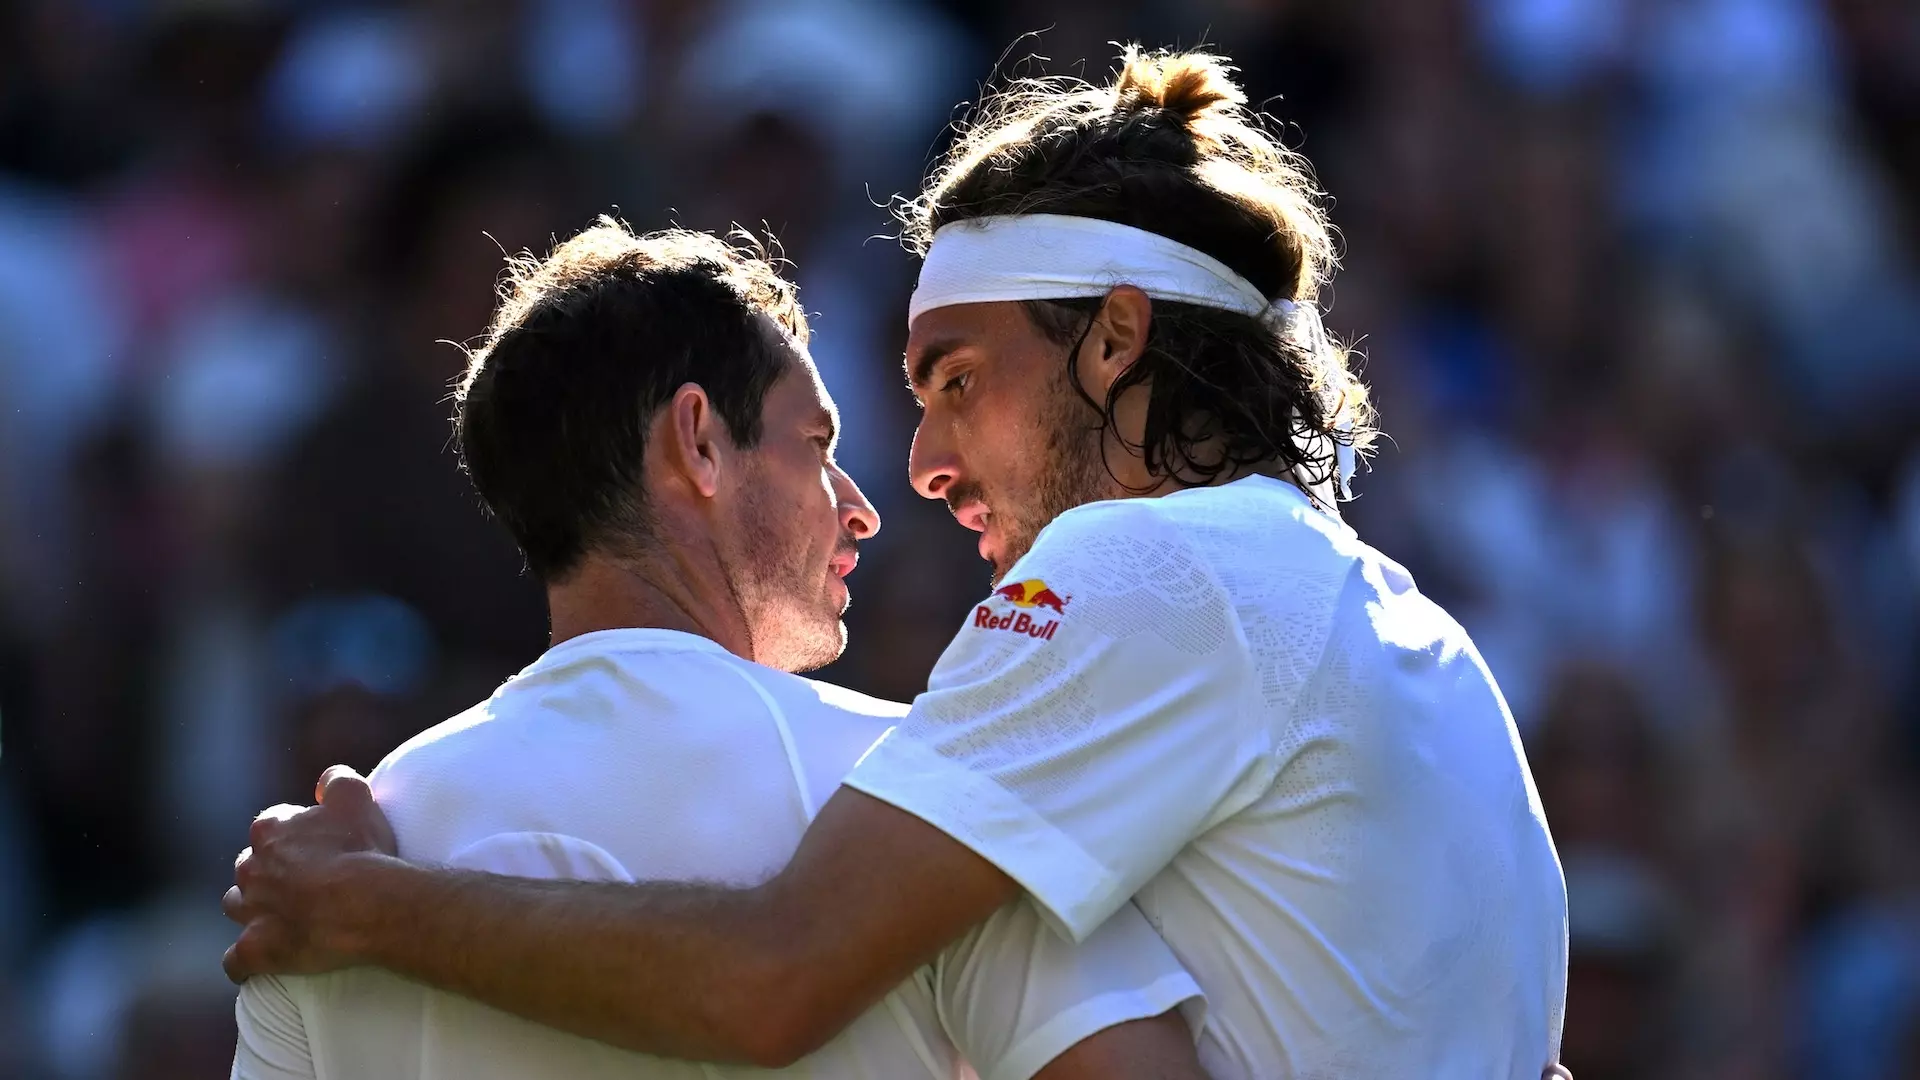 Wimbledon 2023, Stefanos Tsitsipas piega Andy Murray al quinto set. Novak Djokovic agli ottavi